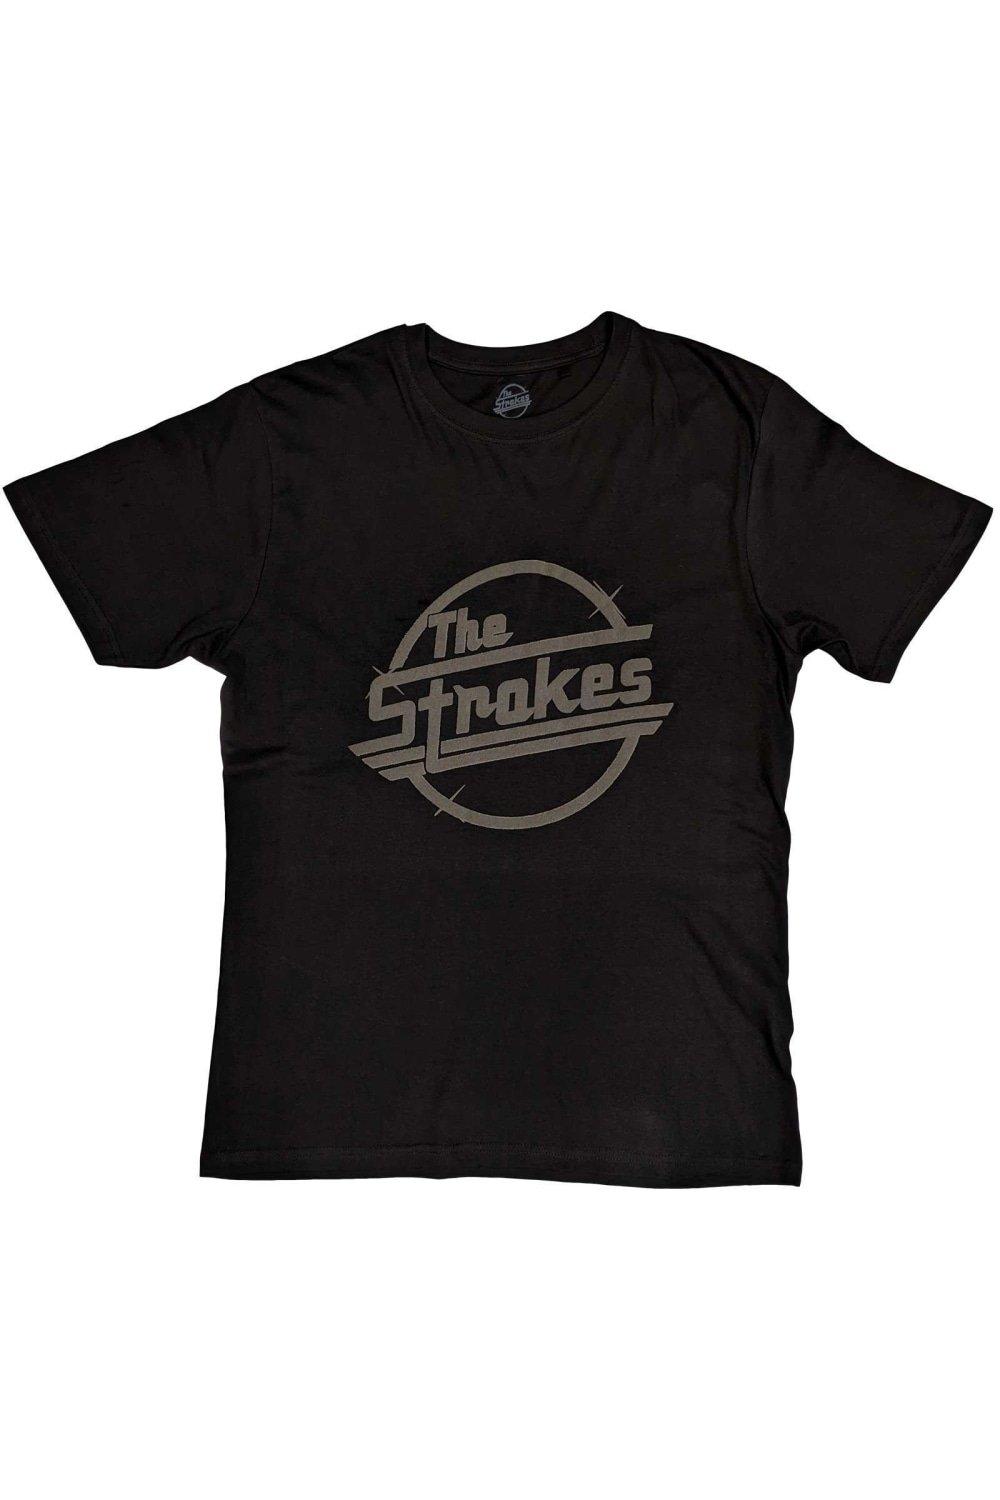 T-Shirts | OG Magna Cotton Hi-Build T-Shirt | The Strokes